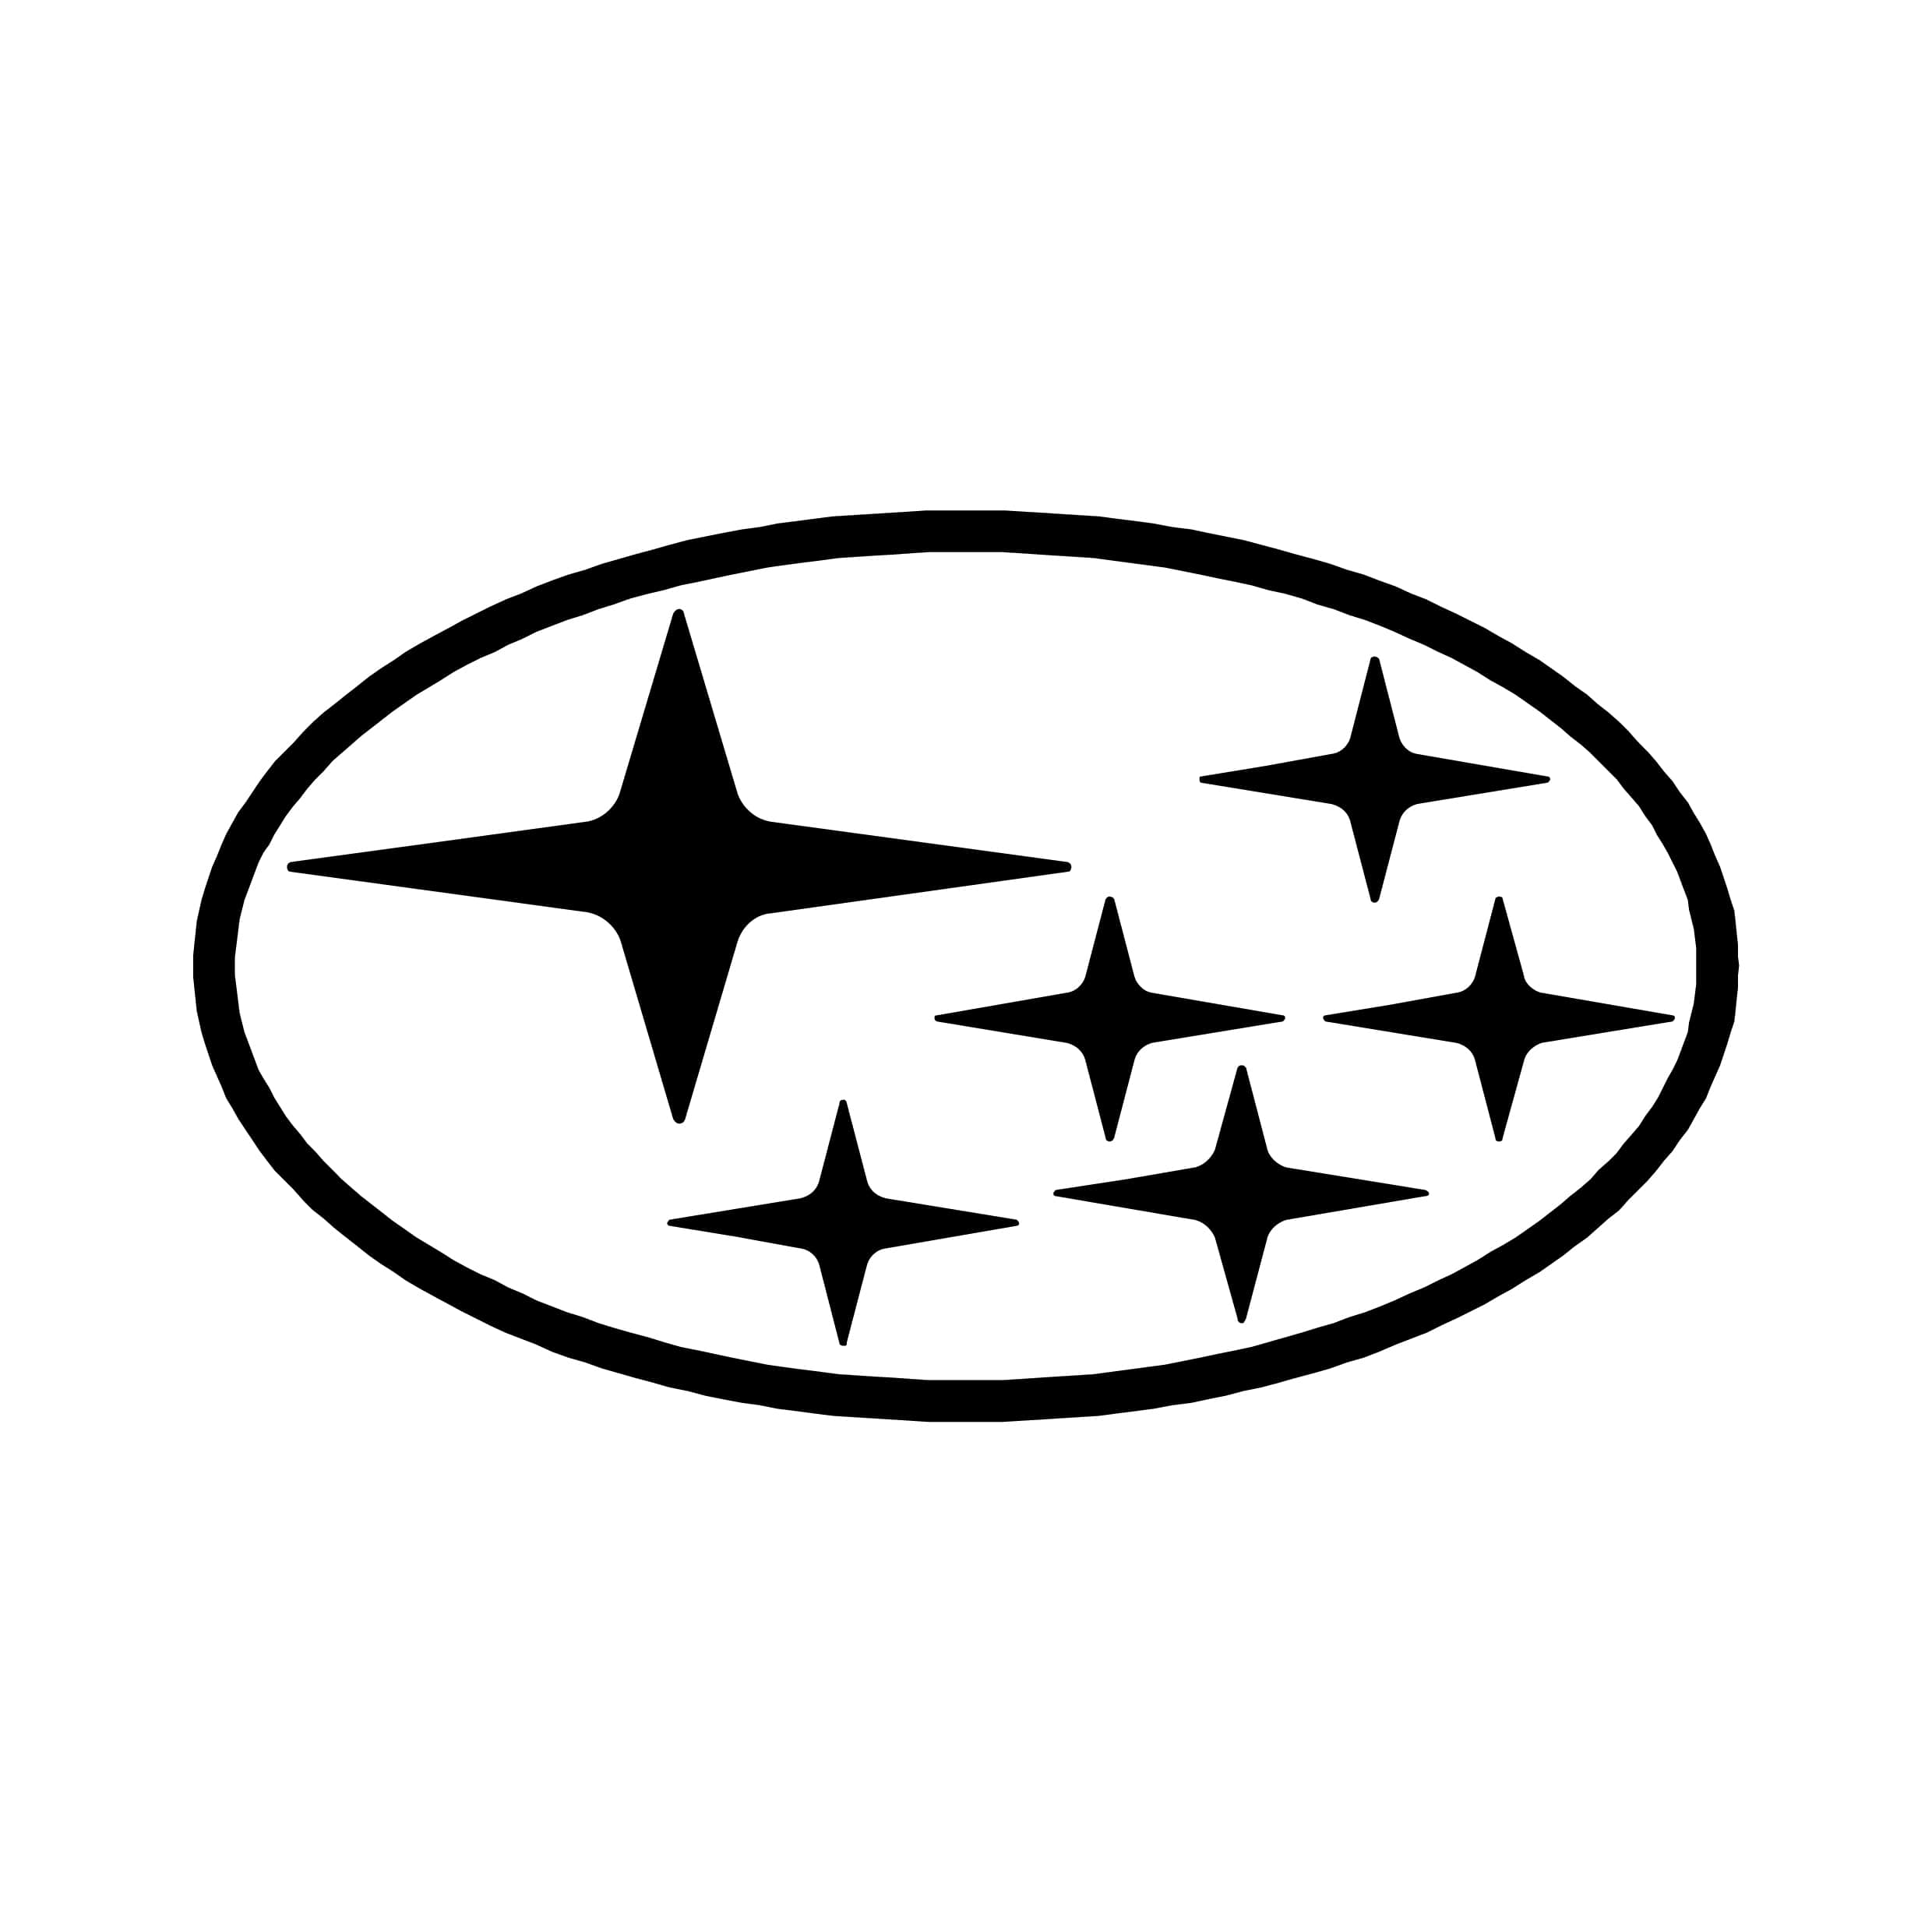 stickers-subaru-ref7-autocollant-voiture-sticker-auto-autocollants-decals-sponsors-racing-tuning-sport-logo-min-min